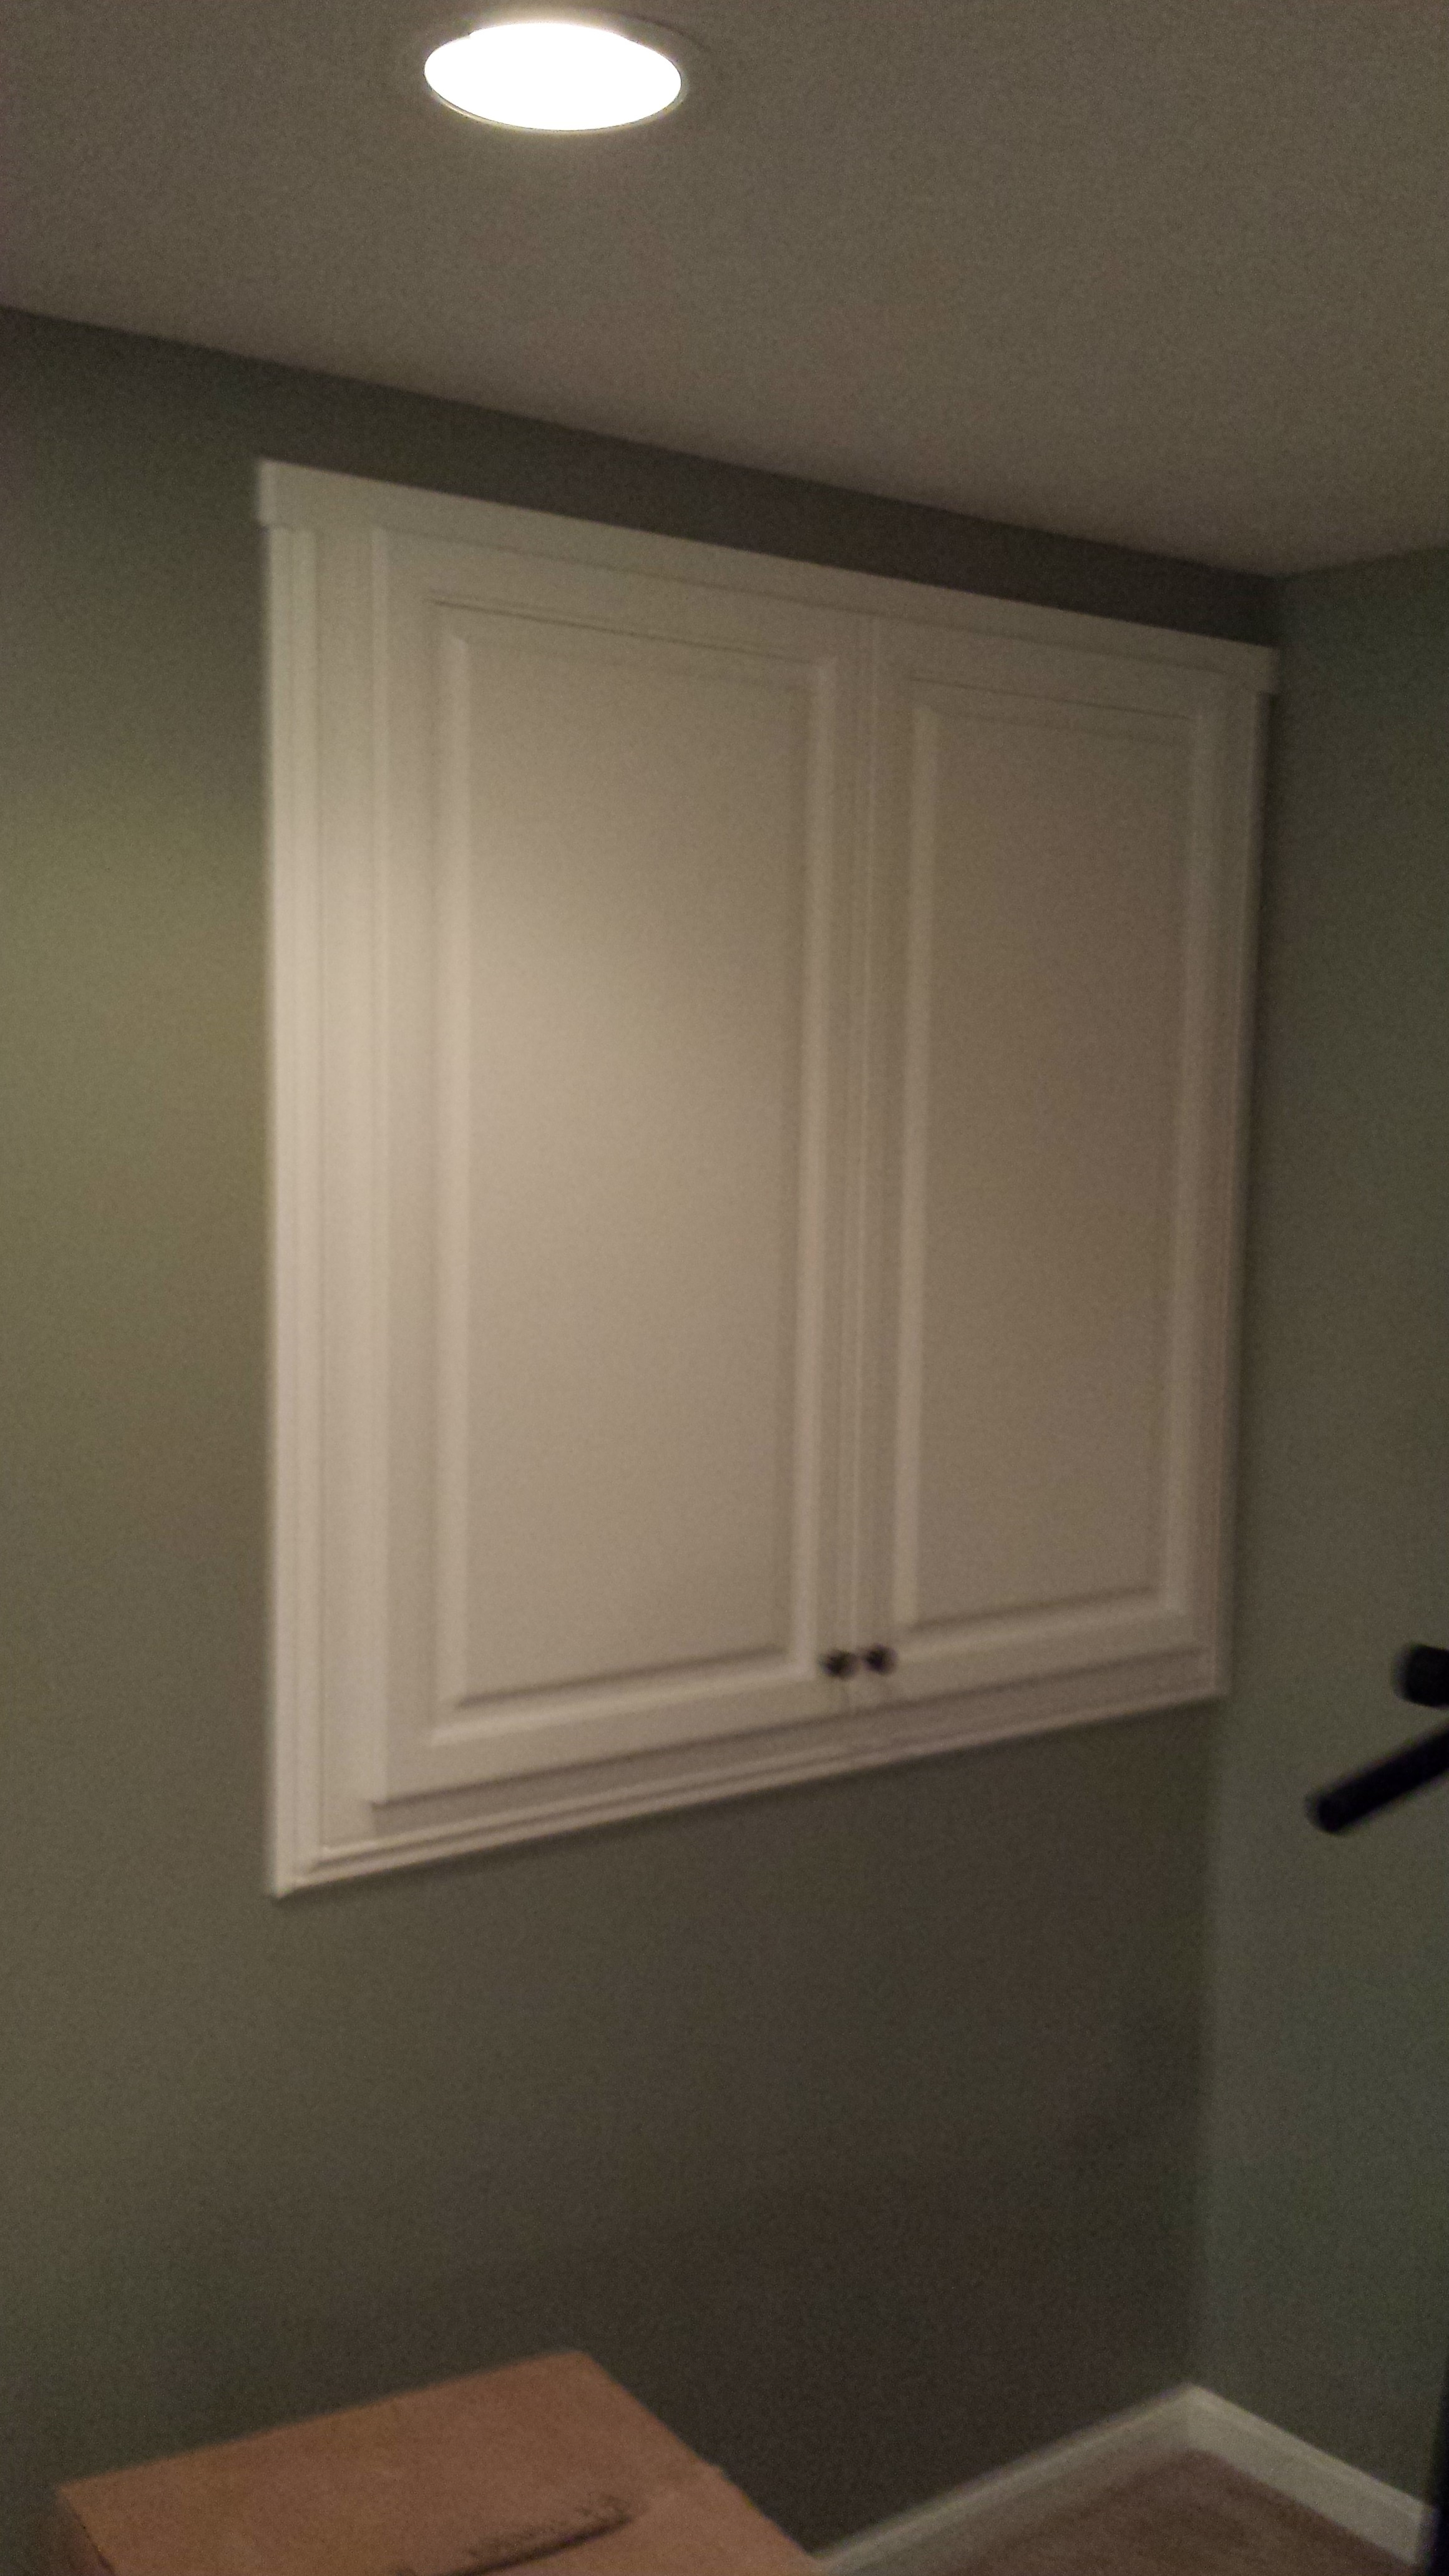 Cabinet doors that hide utility panels